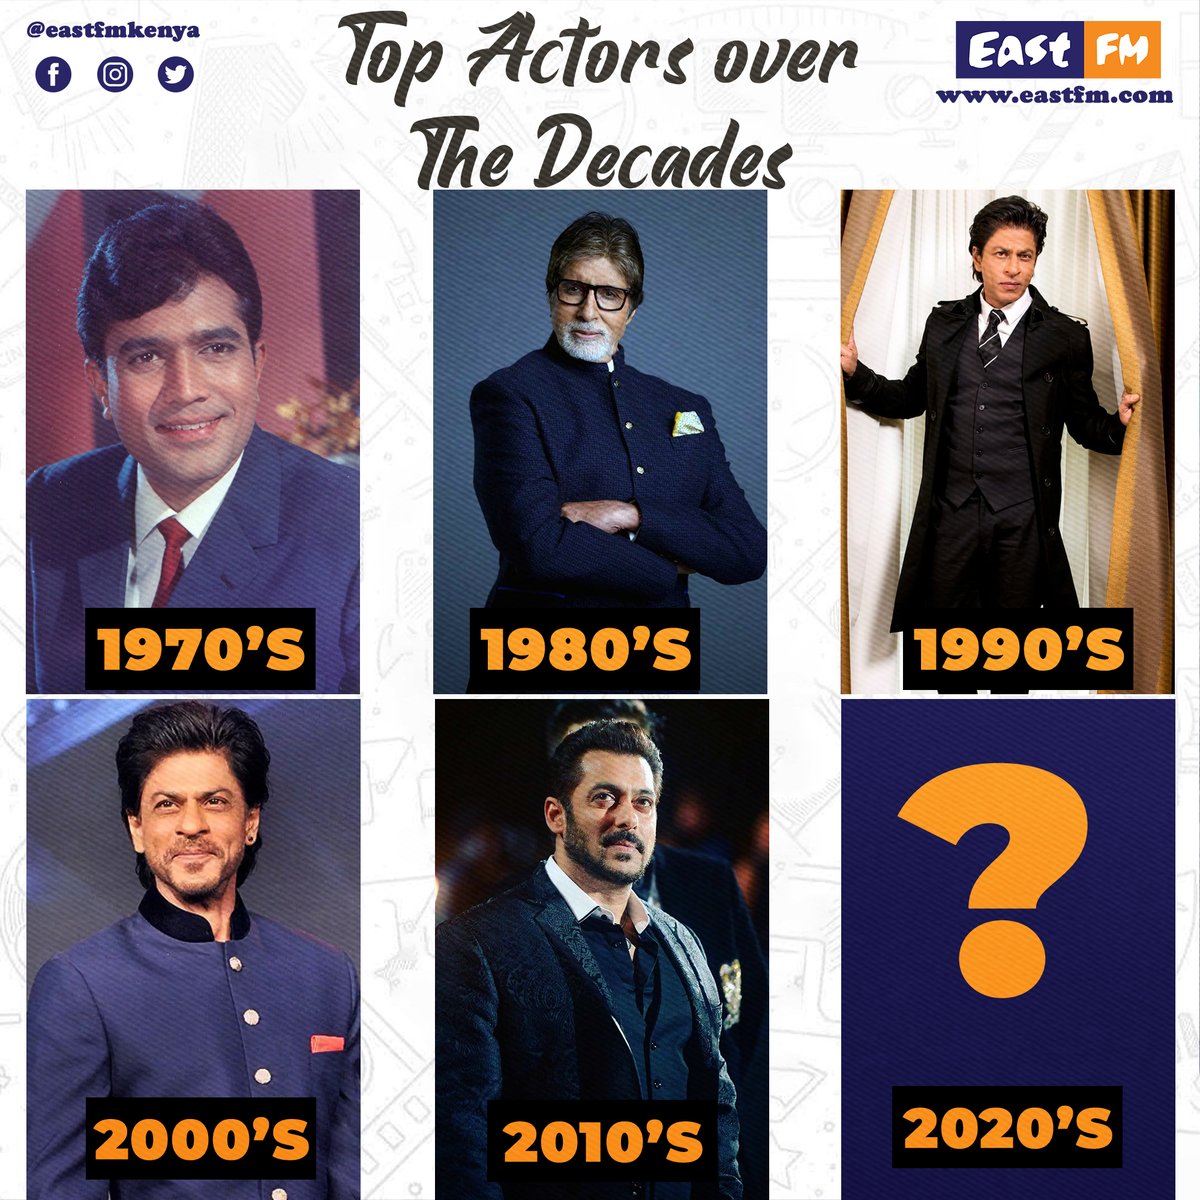 Top Bollywood actors
1970s: #rajeshkhanna 
1980s: #amitabhbachchan 
1990s: #shahrukhkhan 
2000s: #shahrukhkhan 
2010s: #salmankhan 
2020s: ?
.
.
#shahidkapoor #akshaykumar #kartikaaryan 
#ayushmannkhurrana #sidhartmalhotra #hrithikroshan #prabhas #ranveersingh #tigershroff